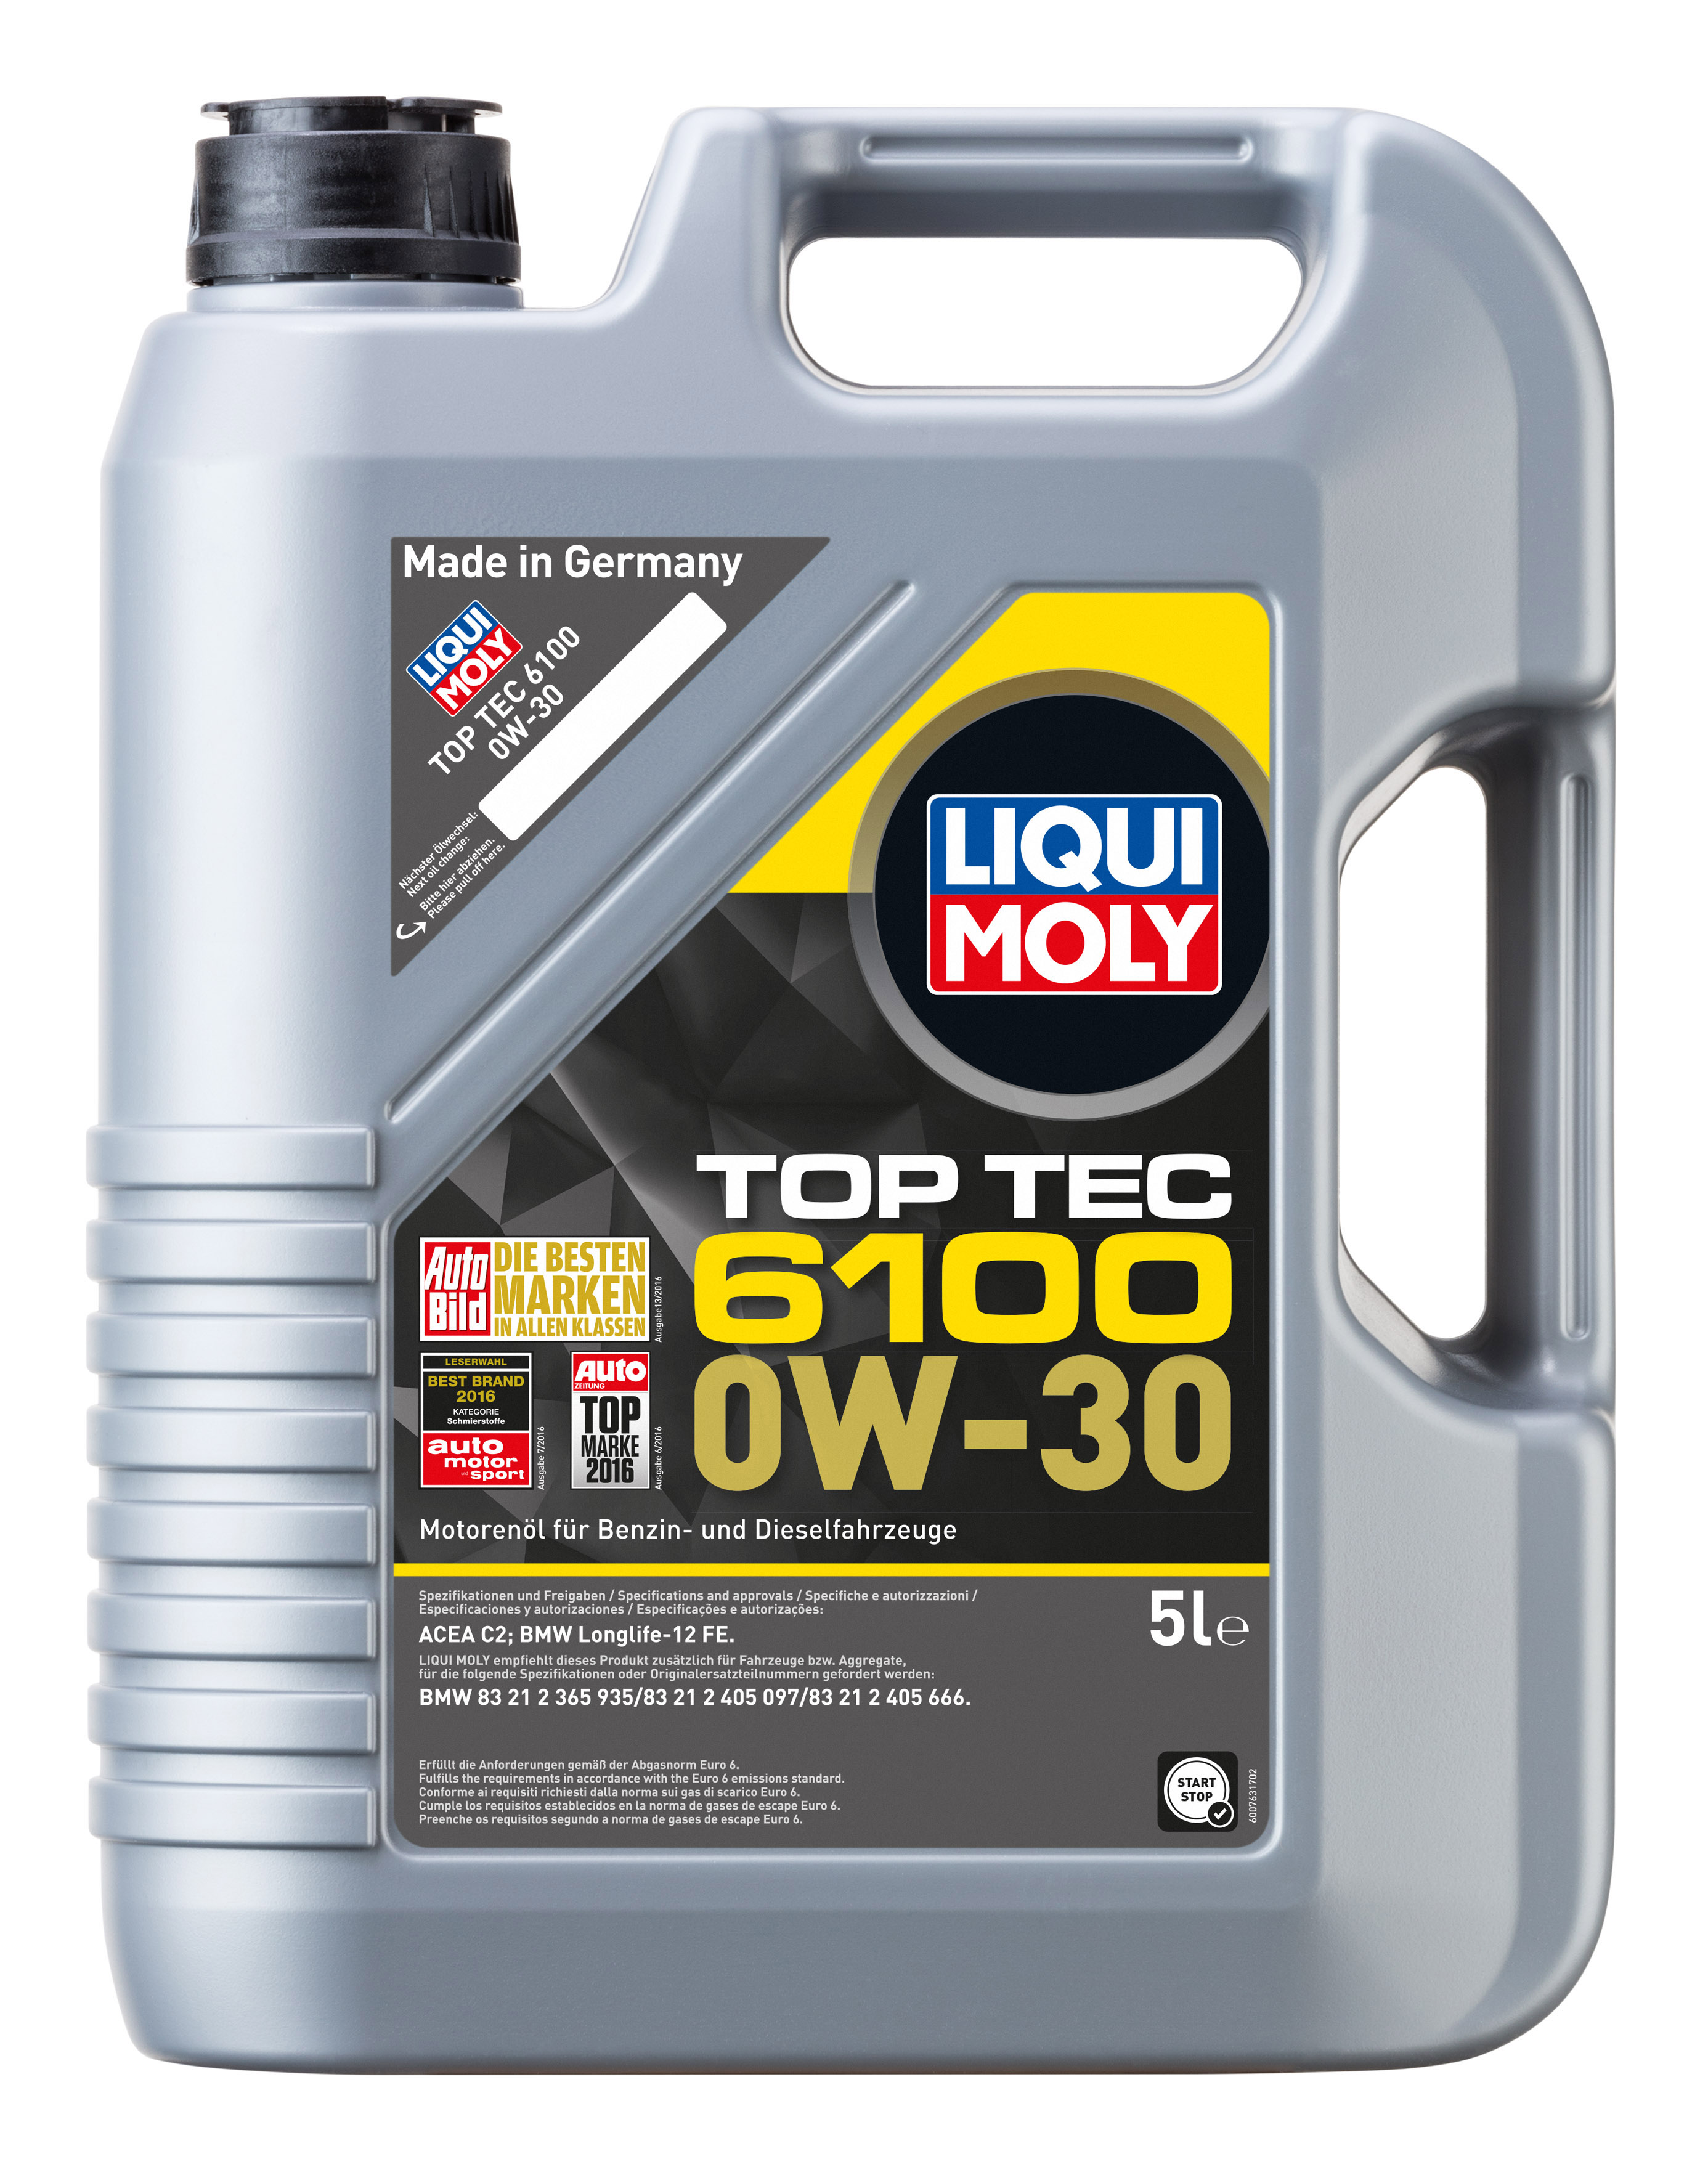 LIQUI MOLY TOP TEC 6100 0W-30 - ALLZU Motorenbau : アルツ